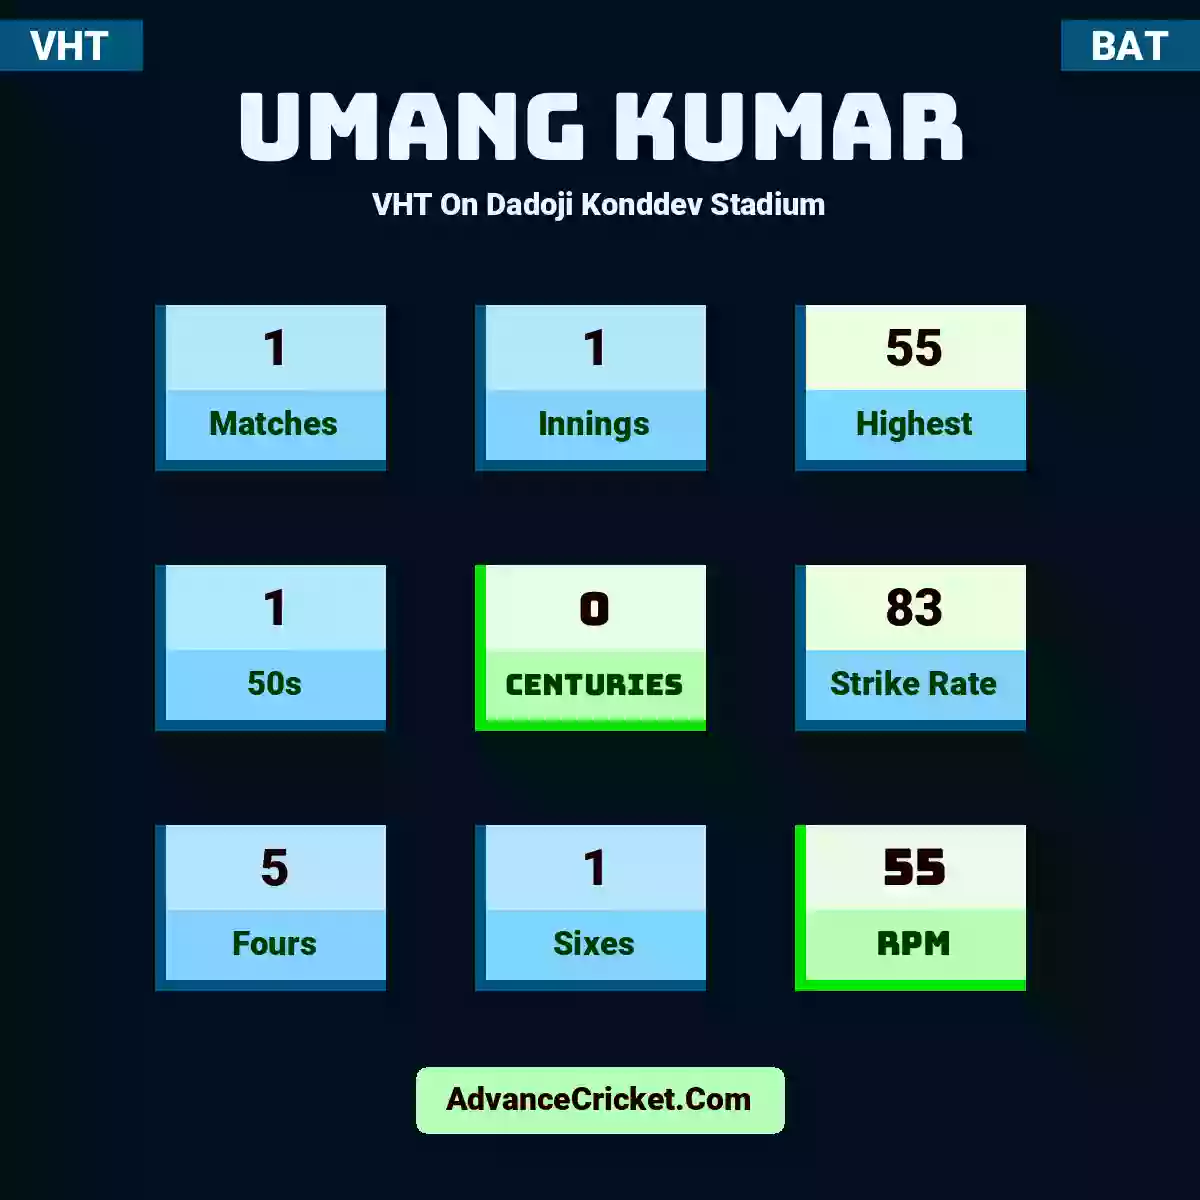 Umang Kumar VHT  On Dadoji Konddev Stadium, Umang Kumar played 1 matches, scored 55 runs as highest, 1 half-centuries, and 0 centuries, with a strike rate of 83. U.Kumar hit 5 fours and 1 sixes, with an RPM of 55.